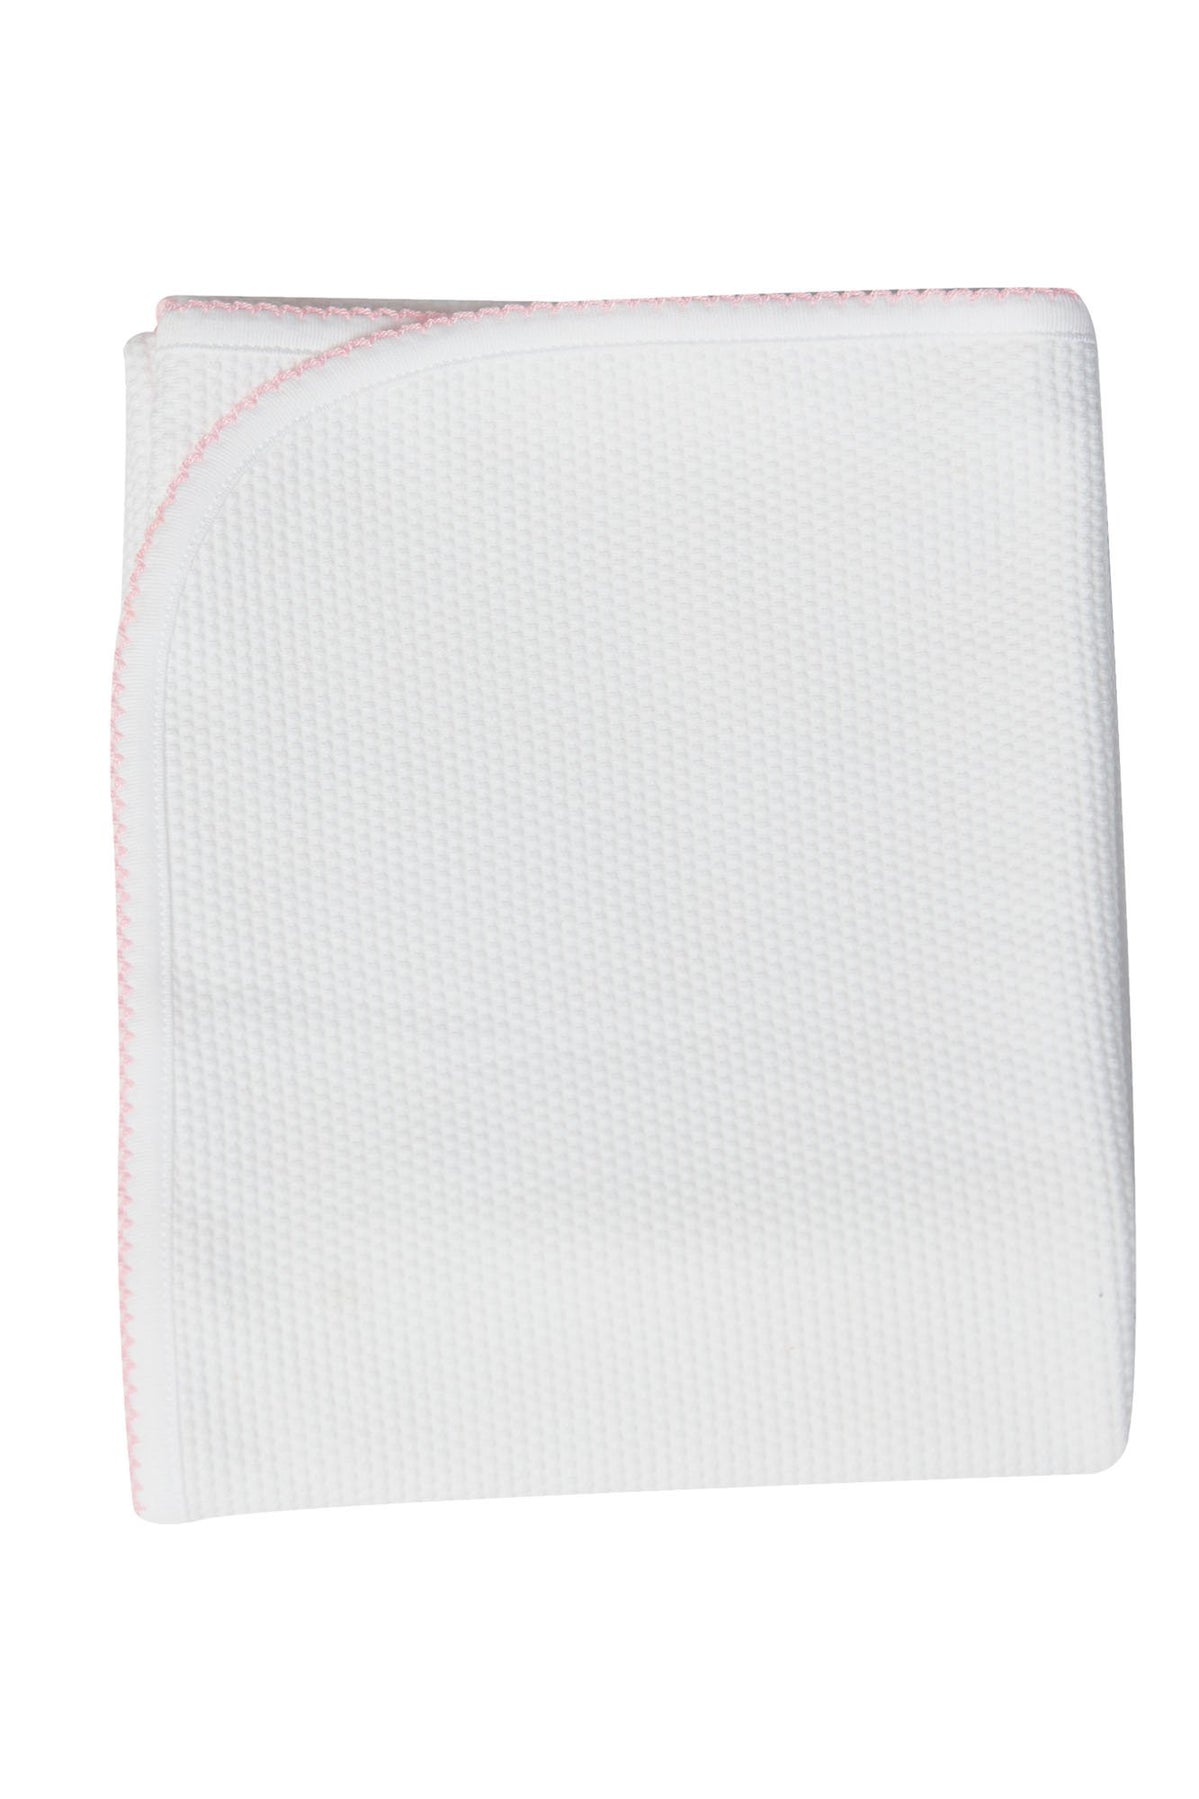 Bubble Pima Baby Blanket: White/Pink